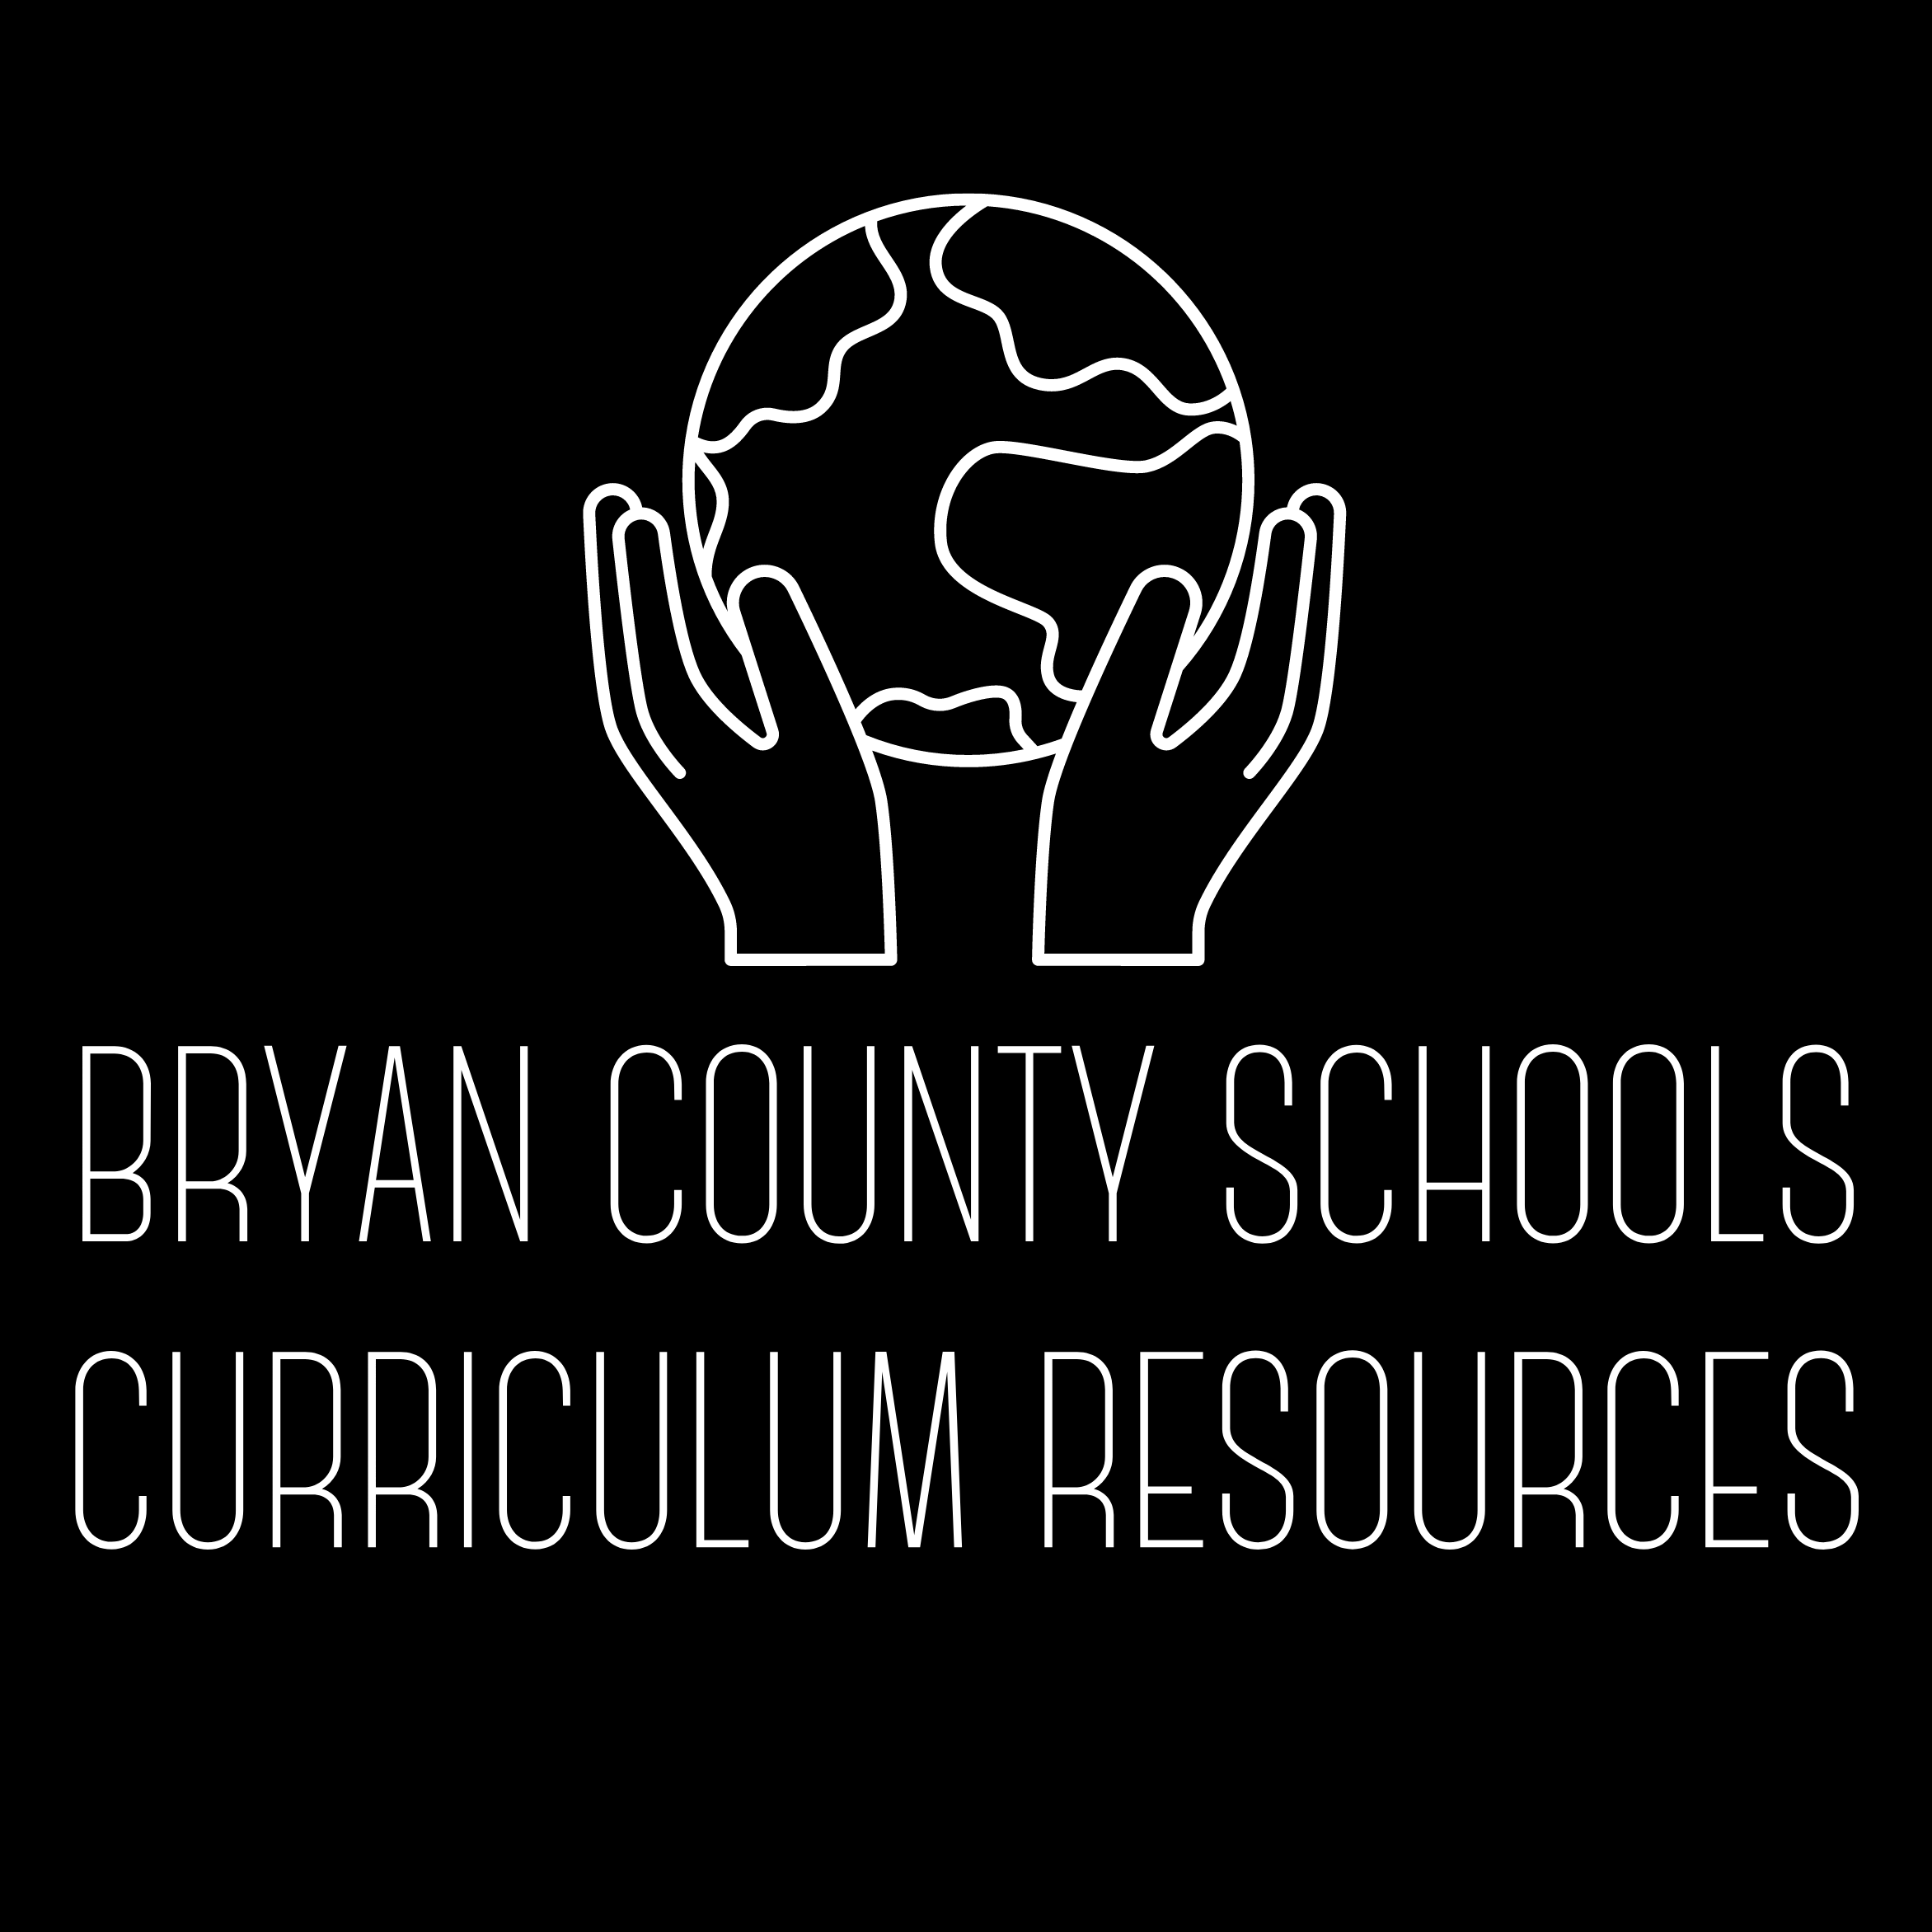 Bryan County Schools Curriculum Resources